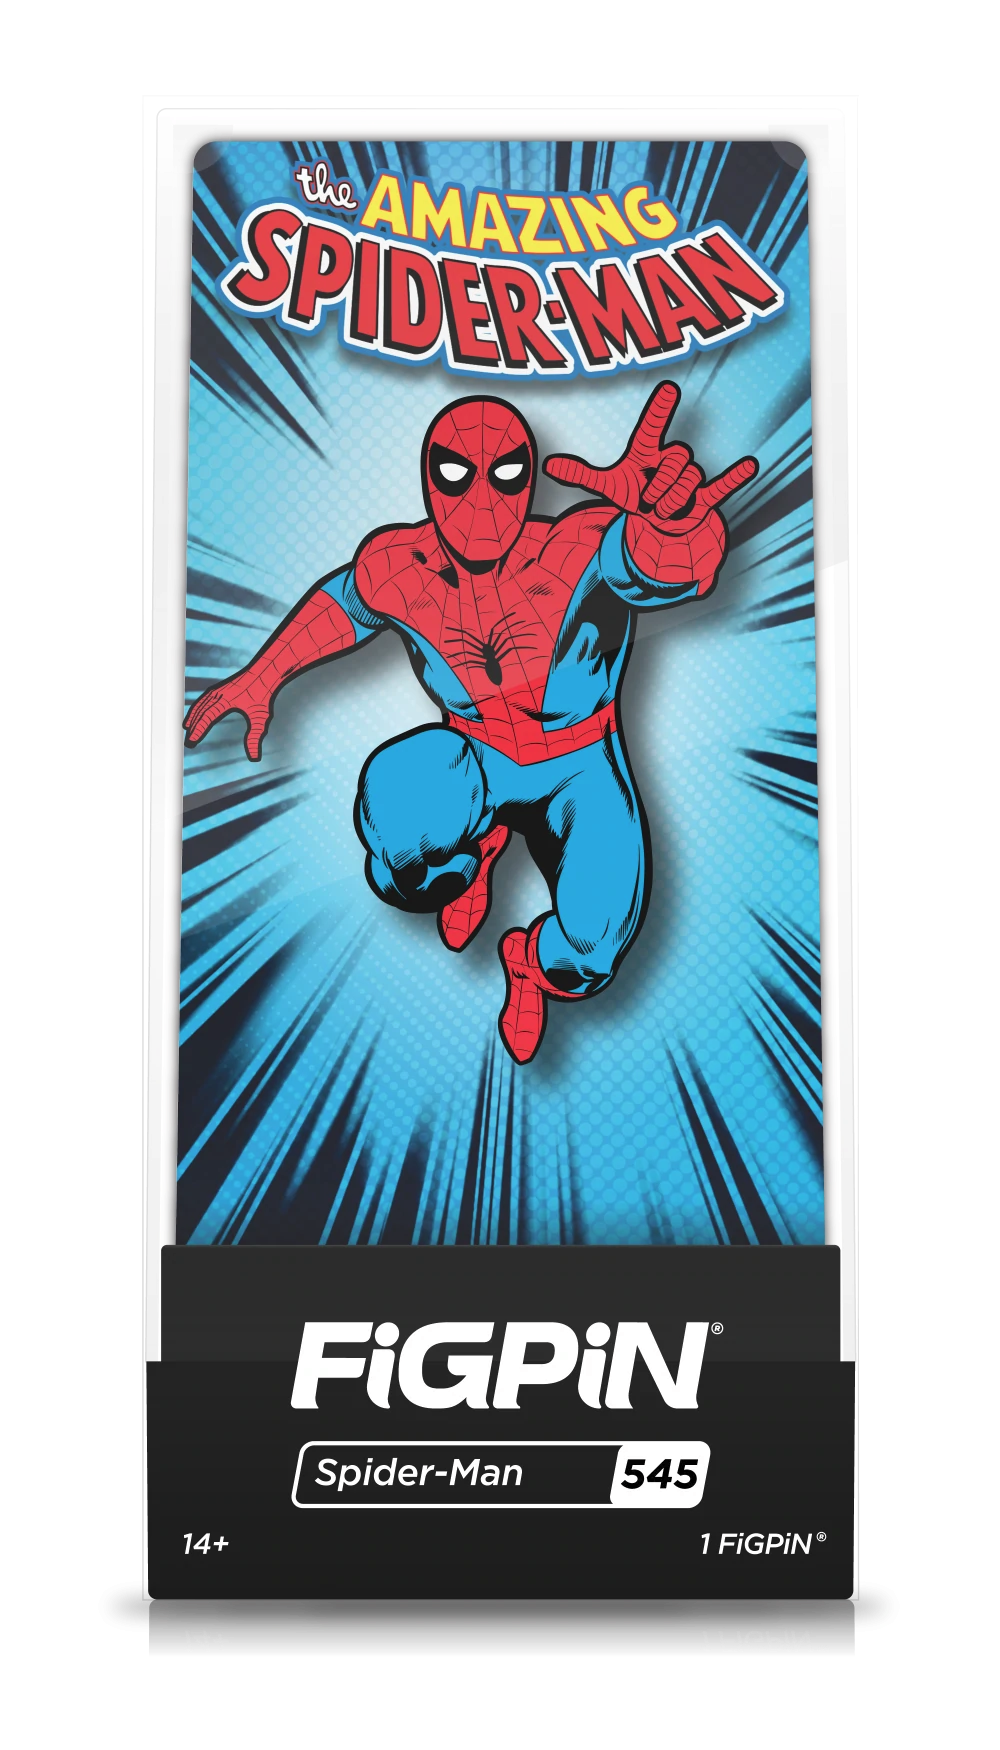 FiGPiN Spider-Man (545) Collectable Enamel Pin MK54NADC40 |28285|